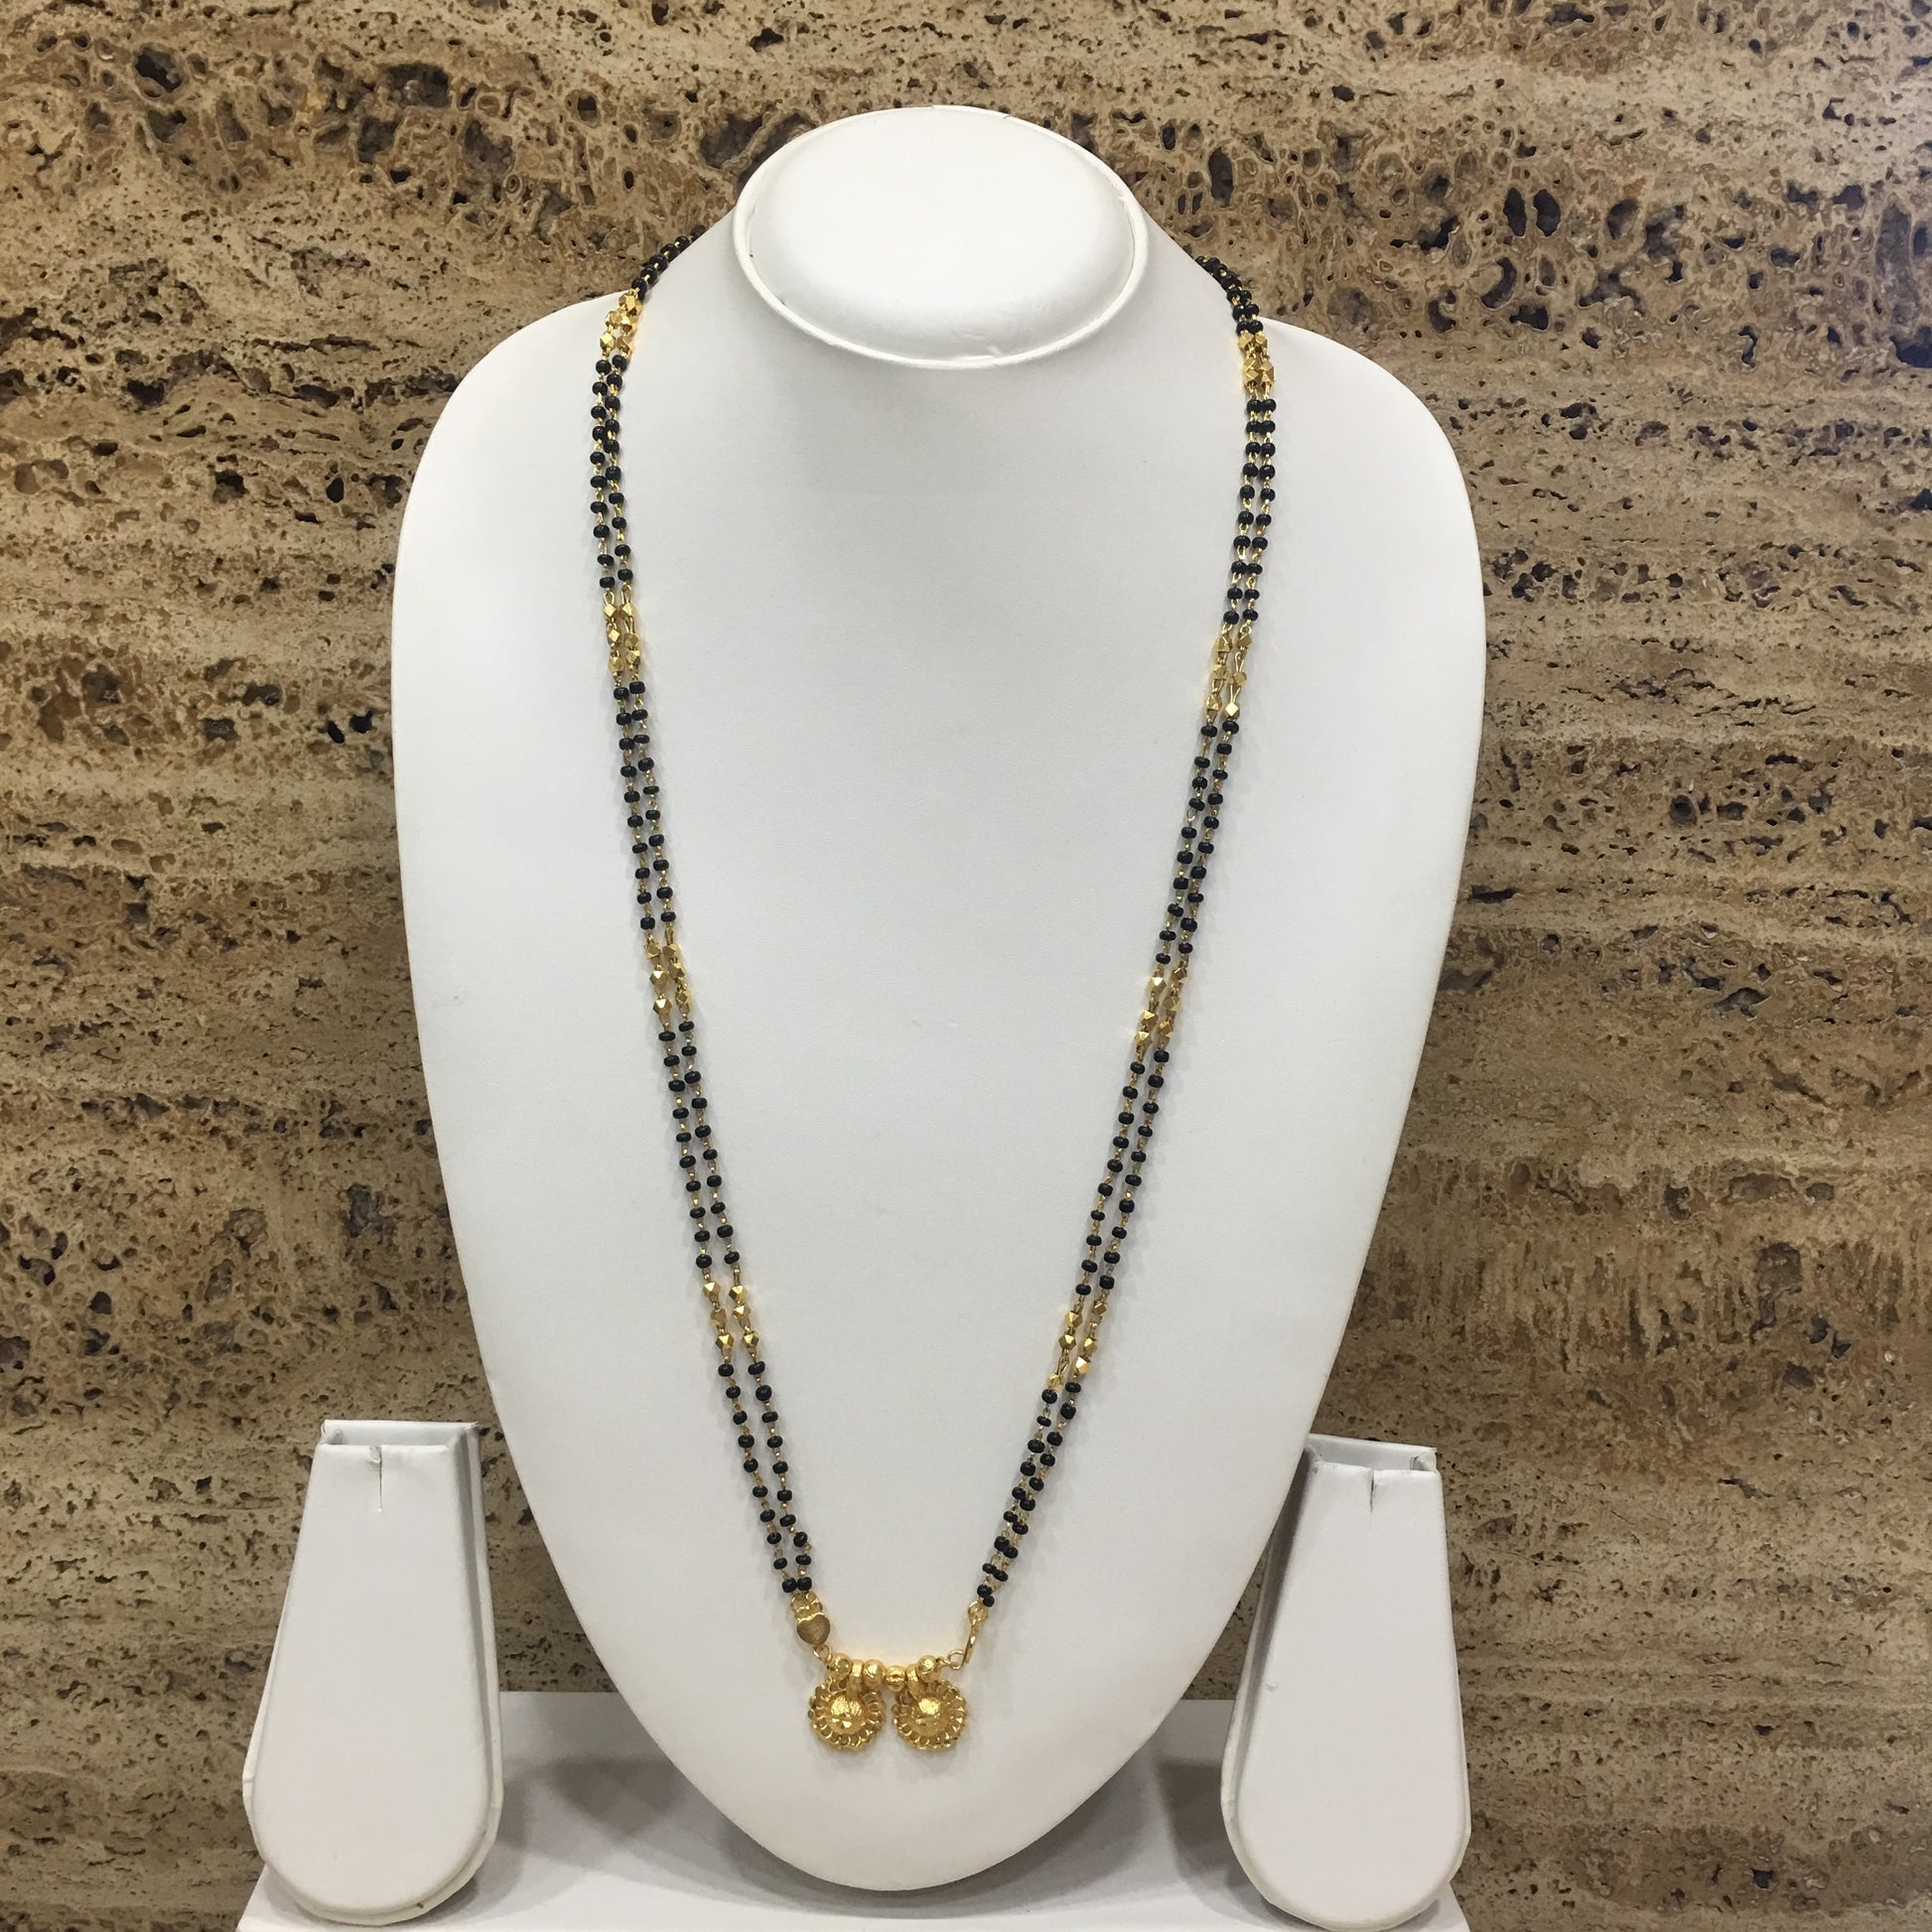 Digital Dress Room Long Mangalsutra Designs Gold Plated Latest 2 Vati Pendant Black & Gold Beads 2 Layer Mangalsutra